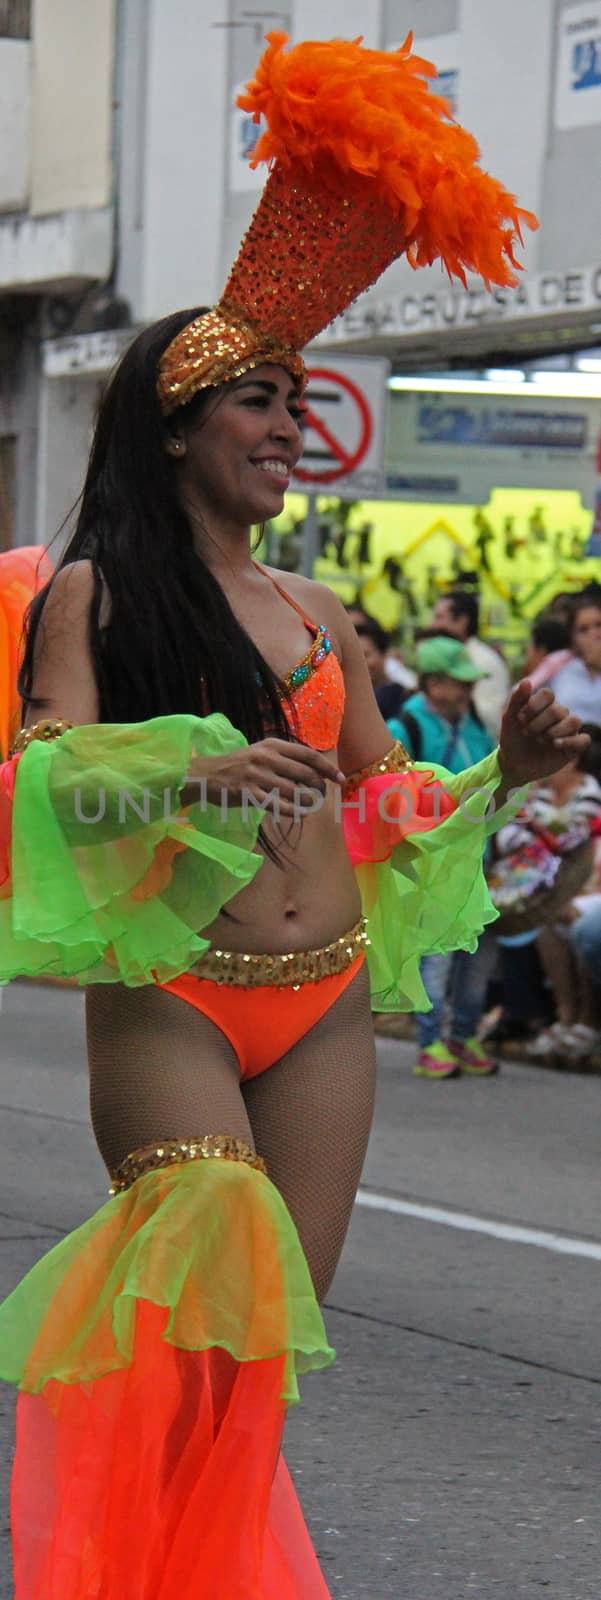 Carnaval Parade by photocdn39